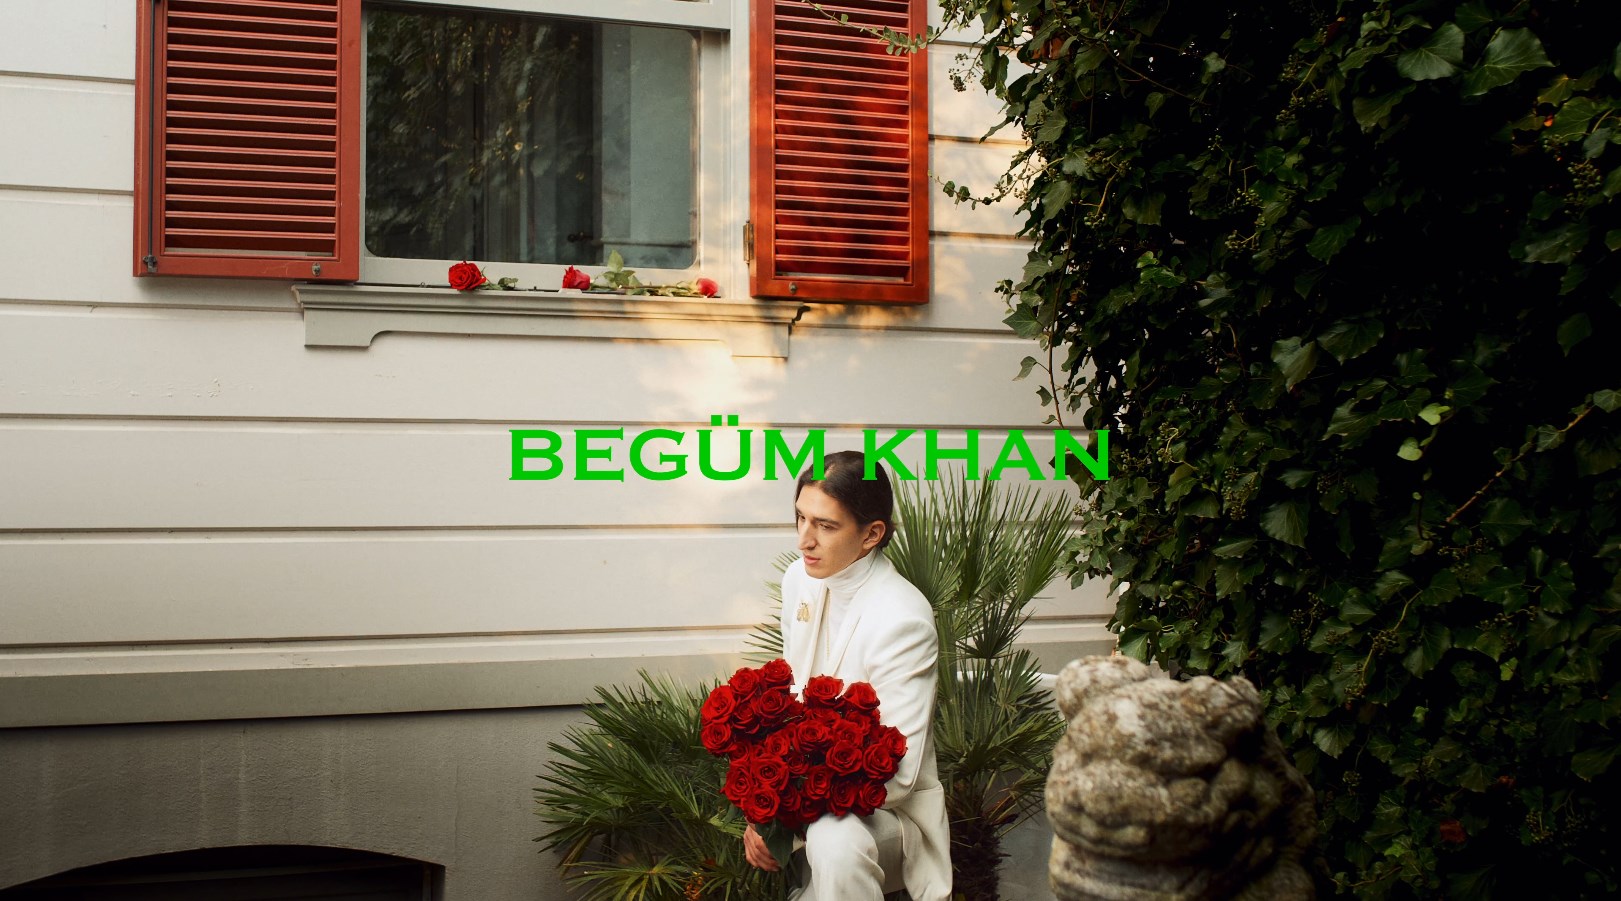 Begum Khan "Pencere"